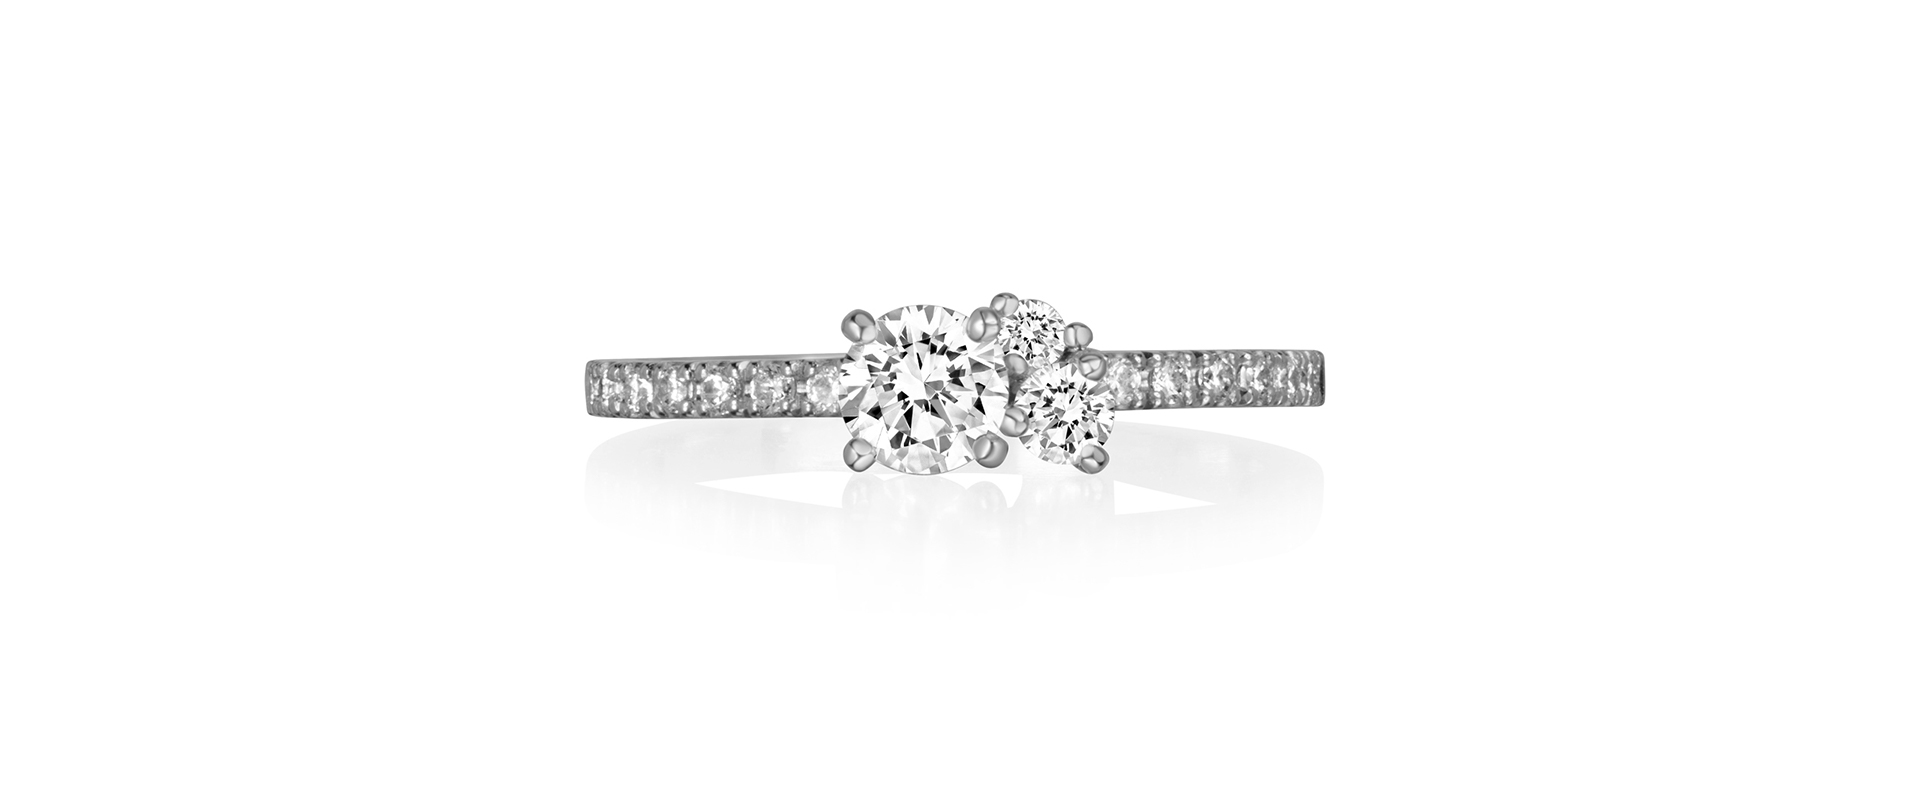 Astral round diamond cluster engagement ring 8 - platinum